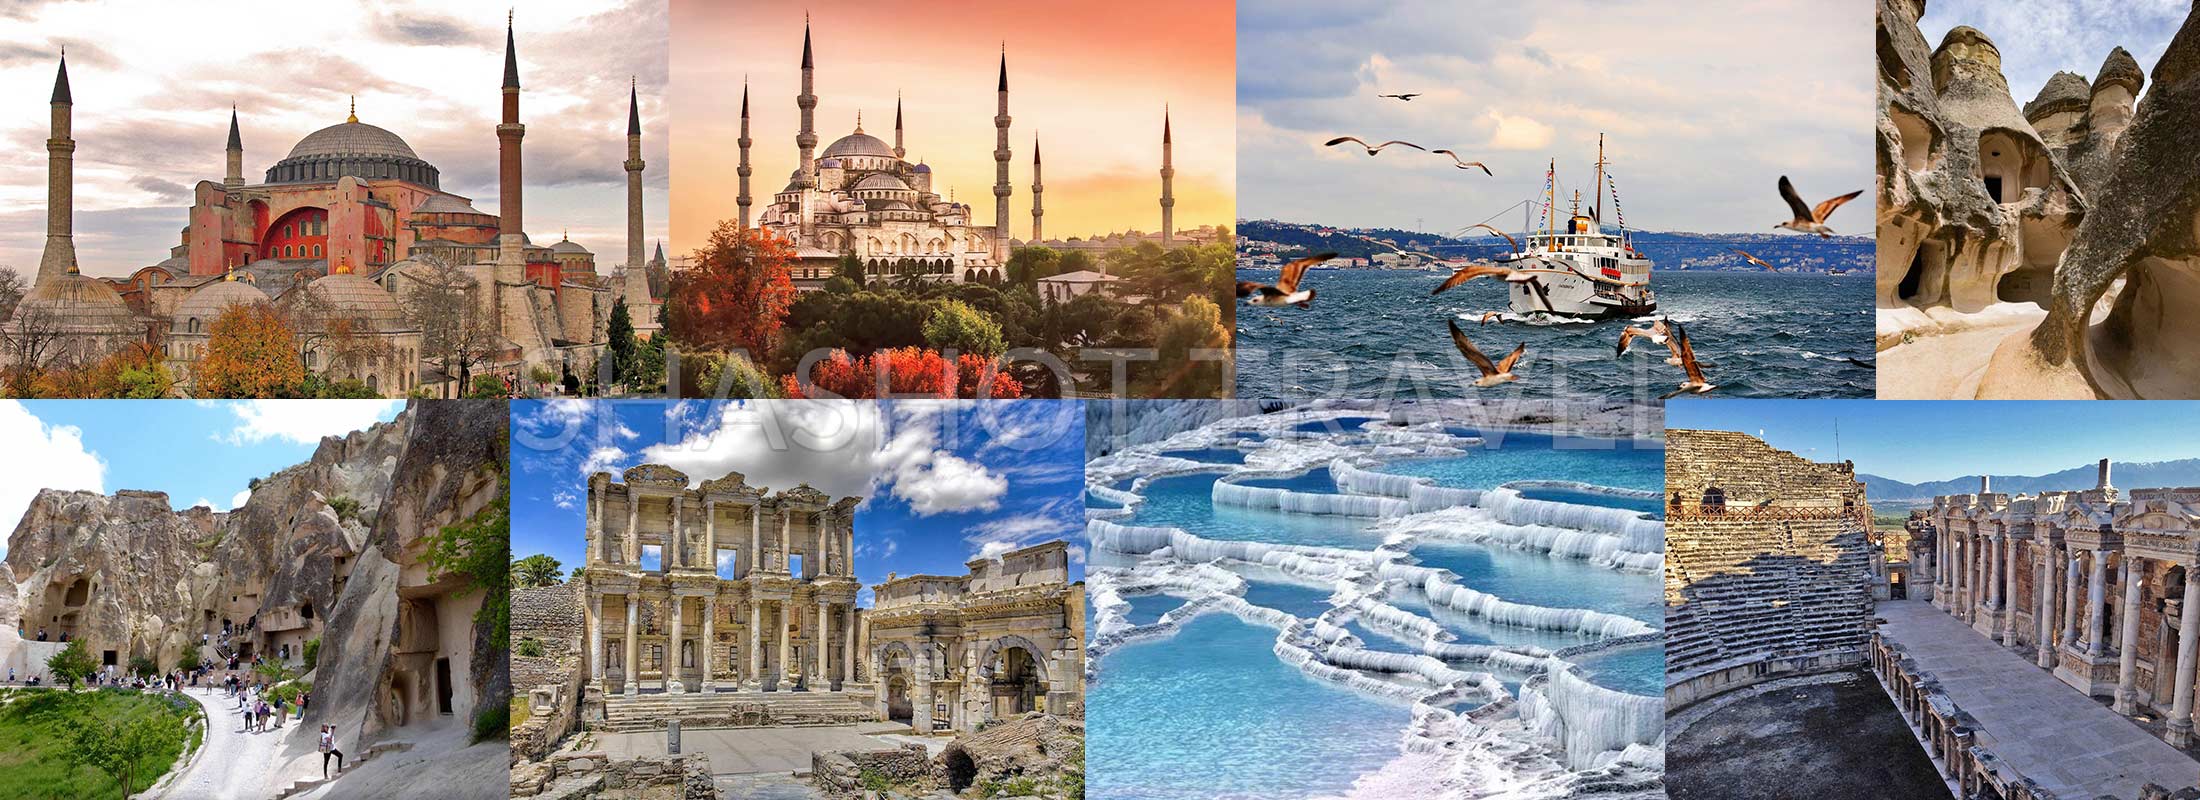 turkey-package-tours-10-days-istanbul-hagia-sophia-museum-blue-mosque-bosphorus-cappadocia-virgin-mary-hourse-ephesus-pamukkale-hierapolis